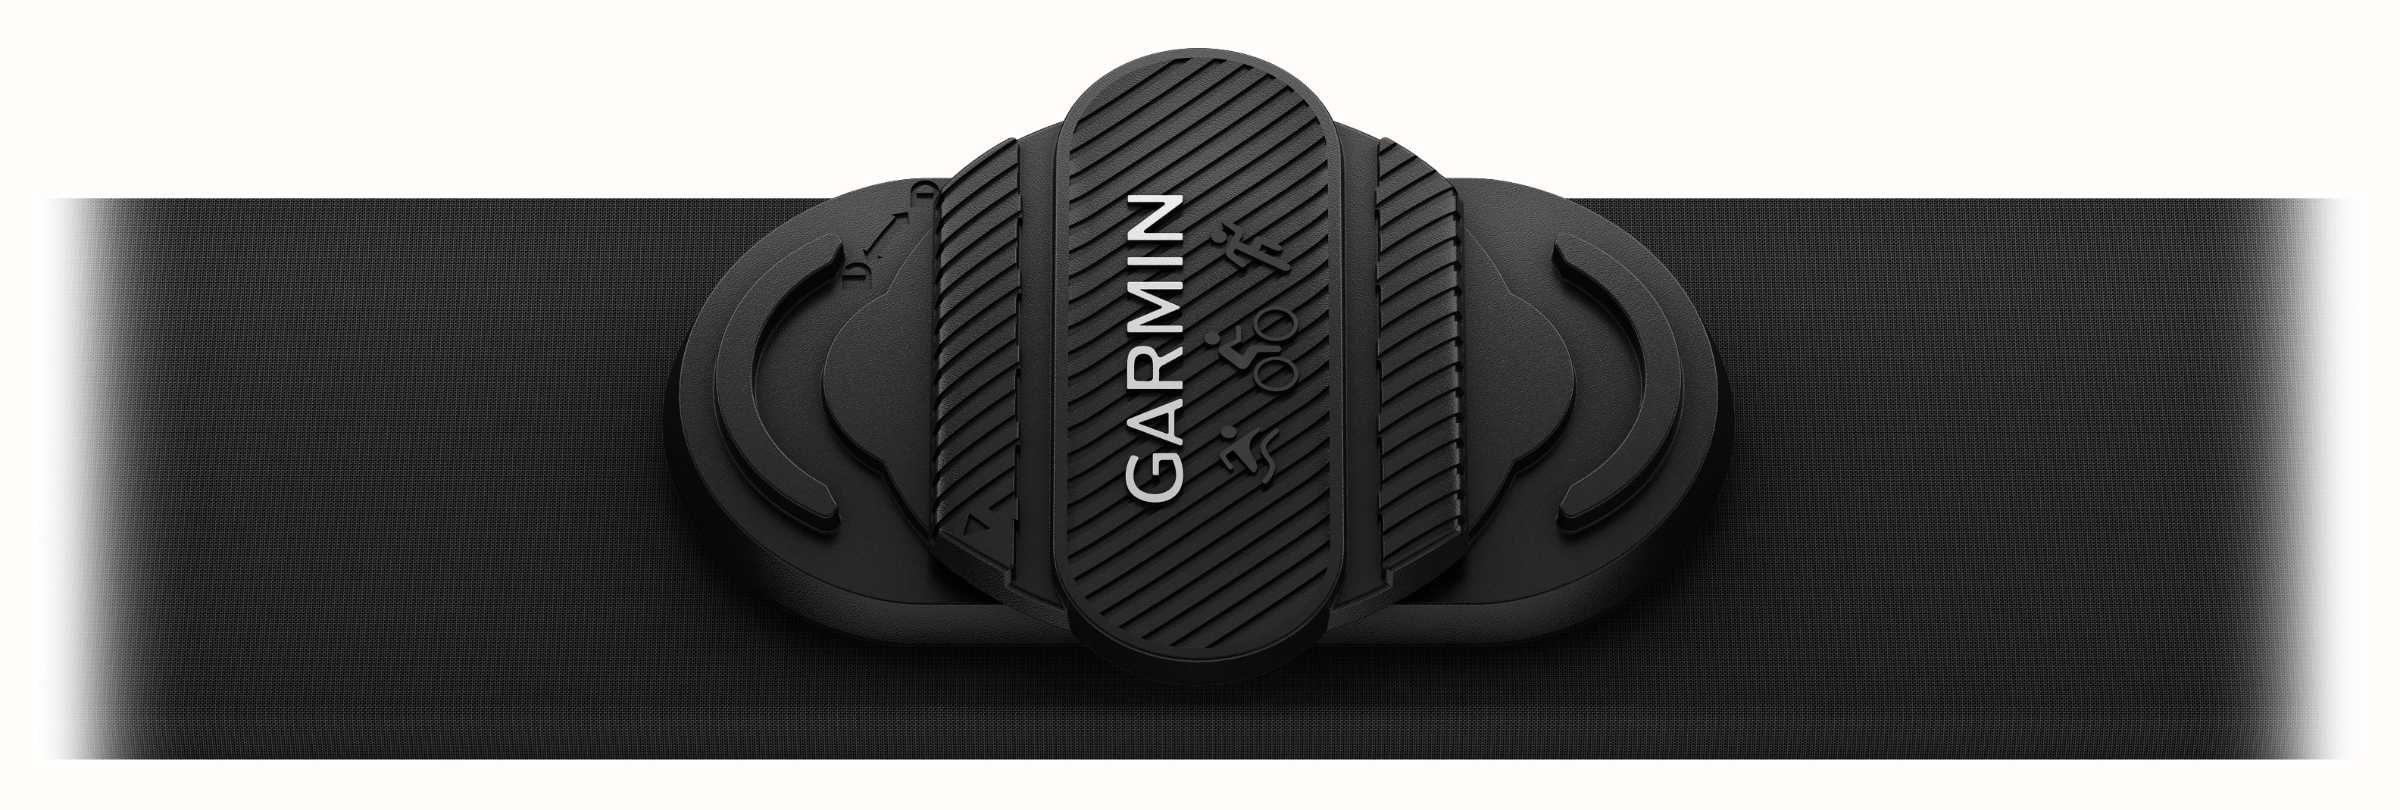 Garmin HRM-Swim With Non-Slip Strap, Blue - 010-12342-00